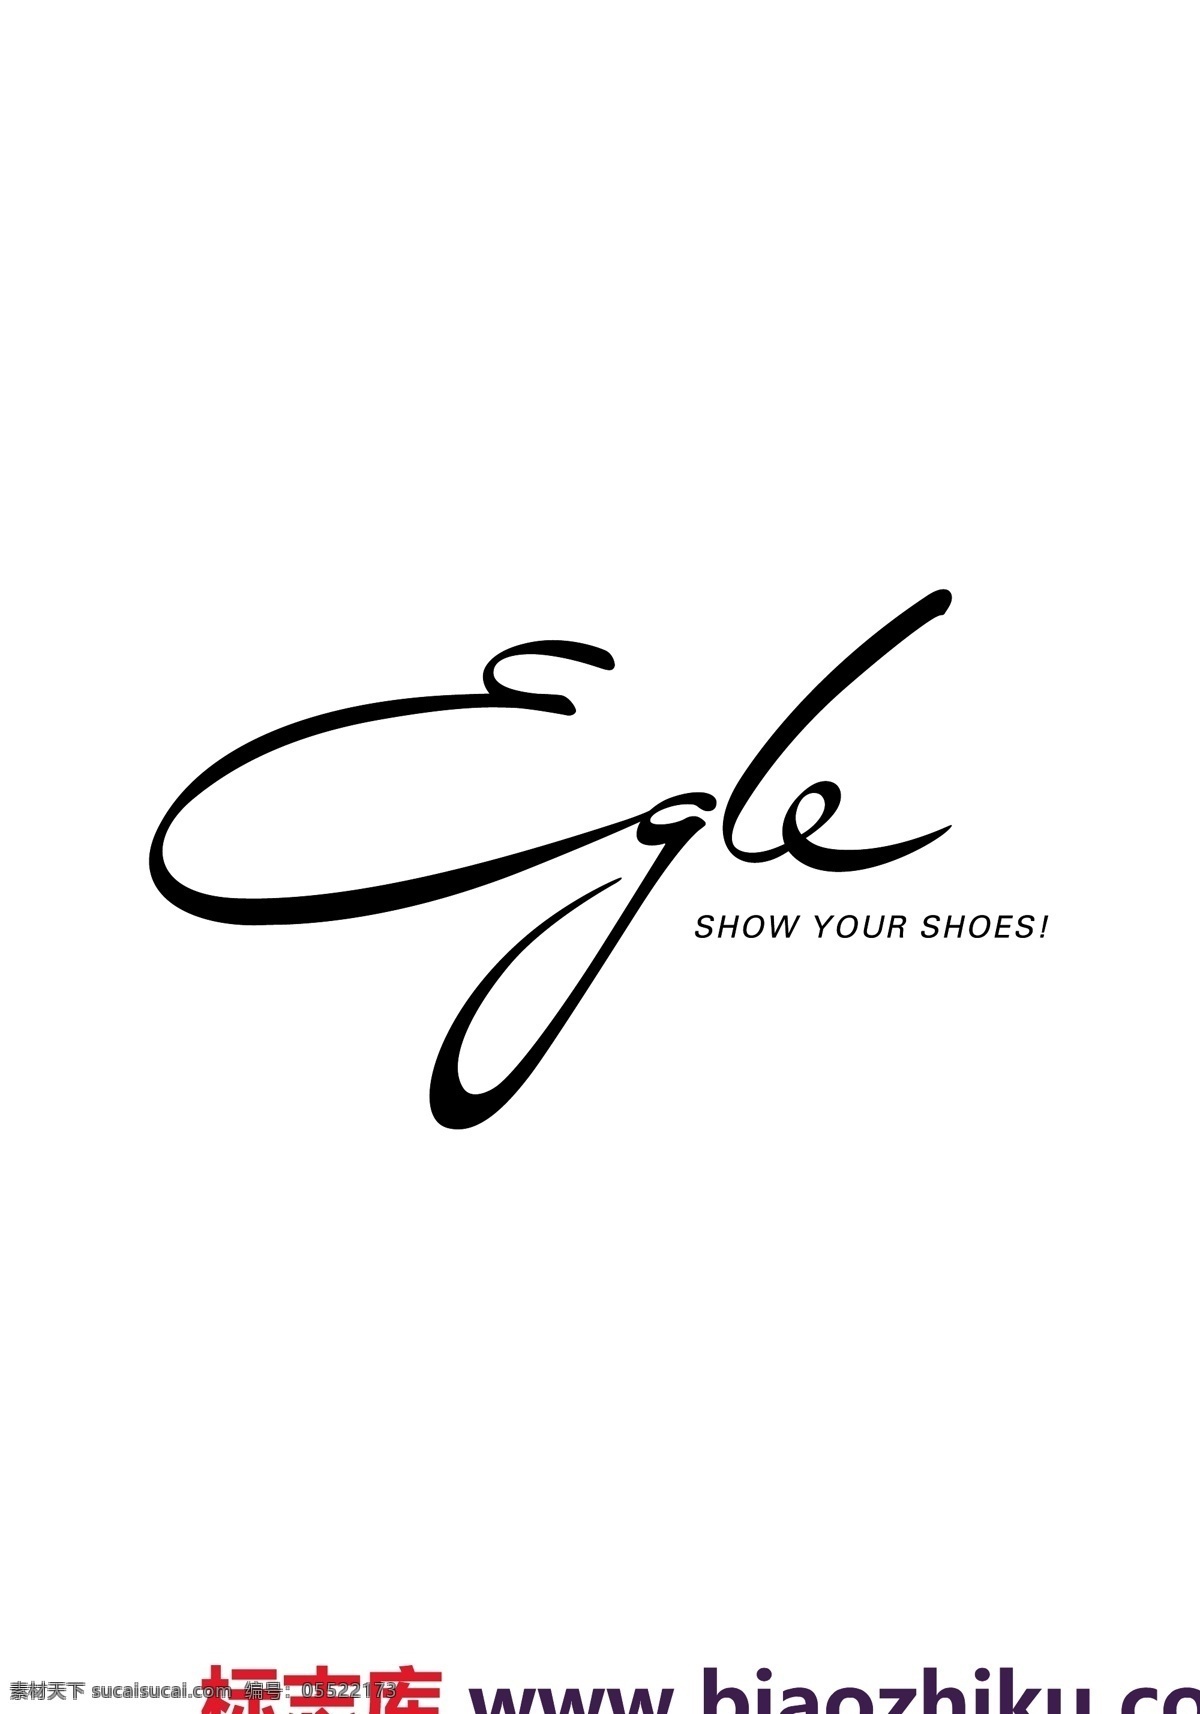 egle logo大全 logo 设计欣赏 商业矢量 矢量下载 服饰 品牌 标志设计 欣赏 网页矢量 矢量图 其他矢量图